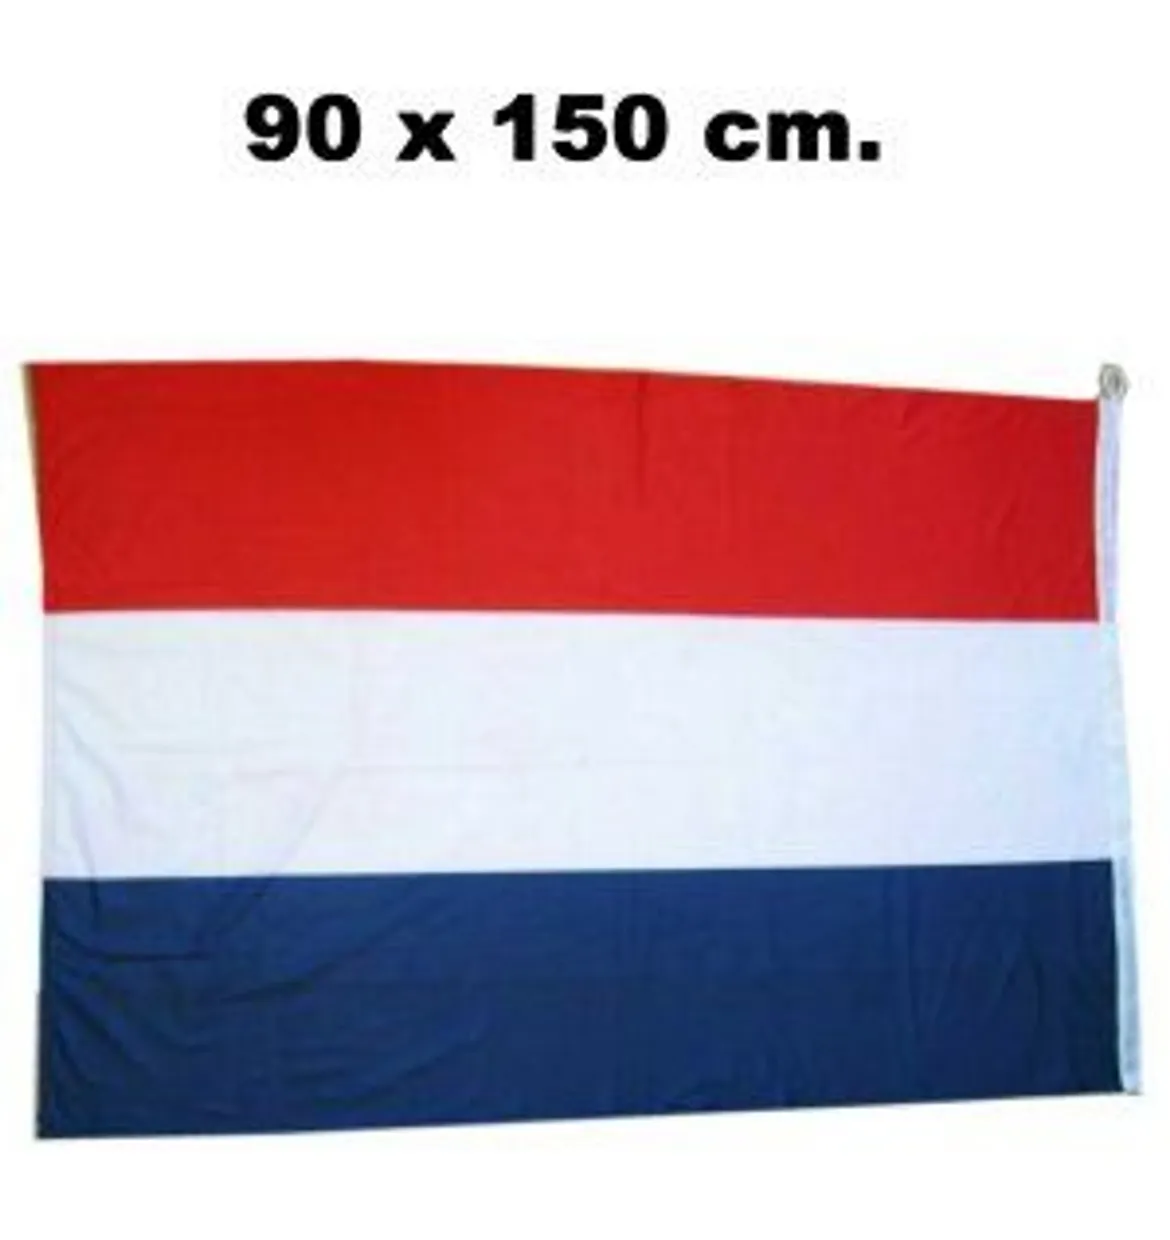 Gevelvlag Nederland 90 x 150 cm